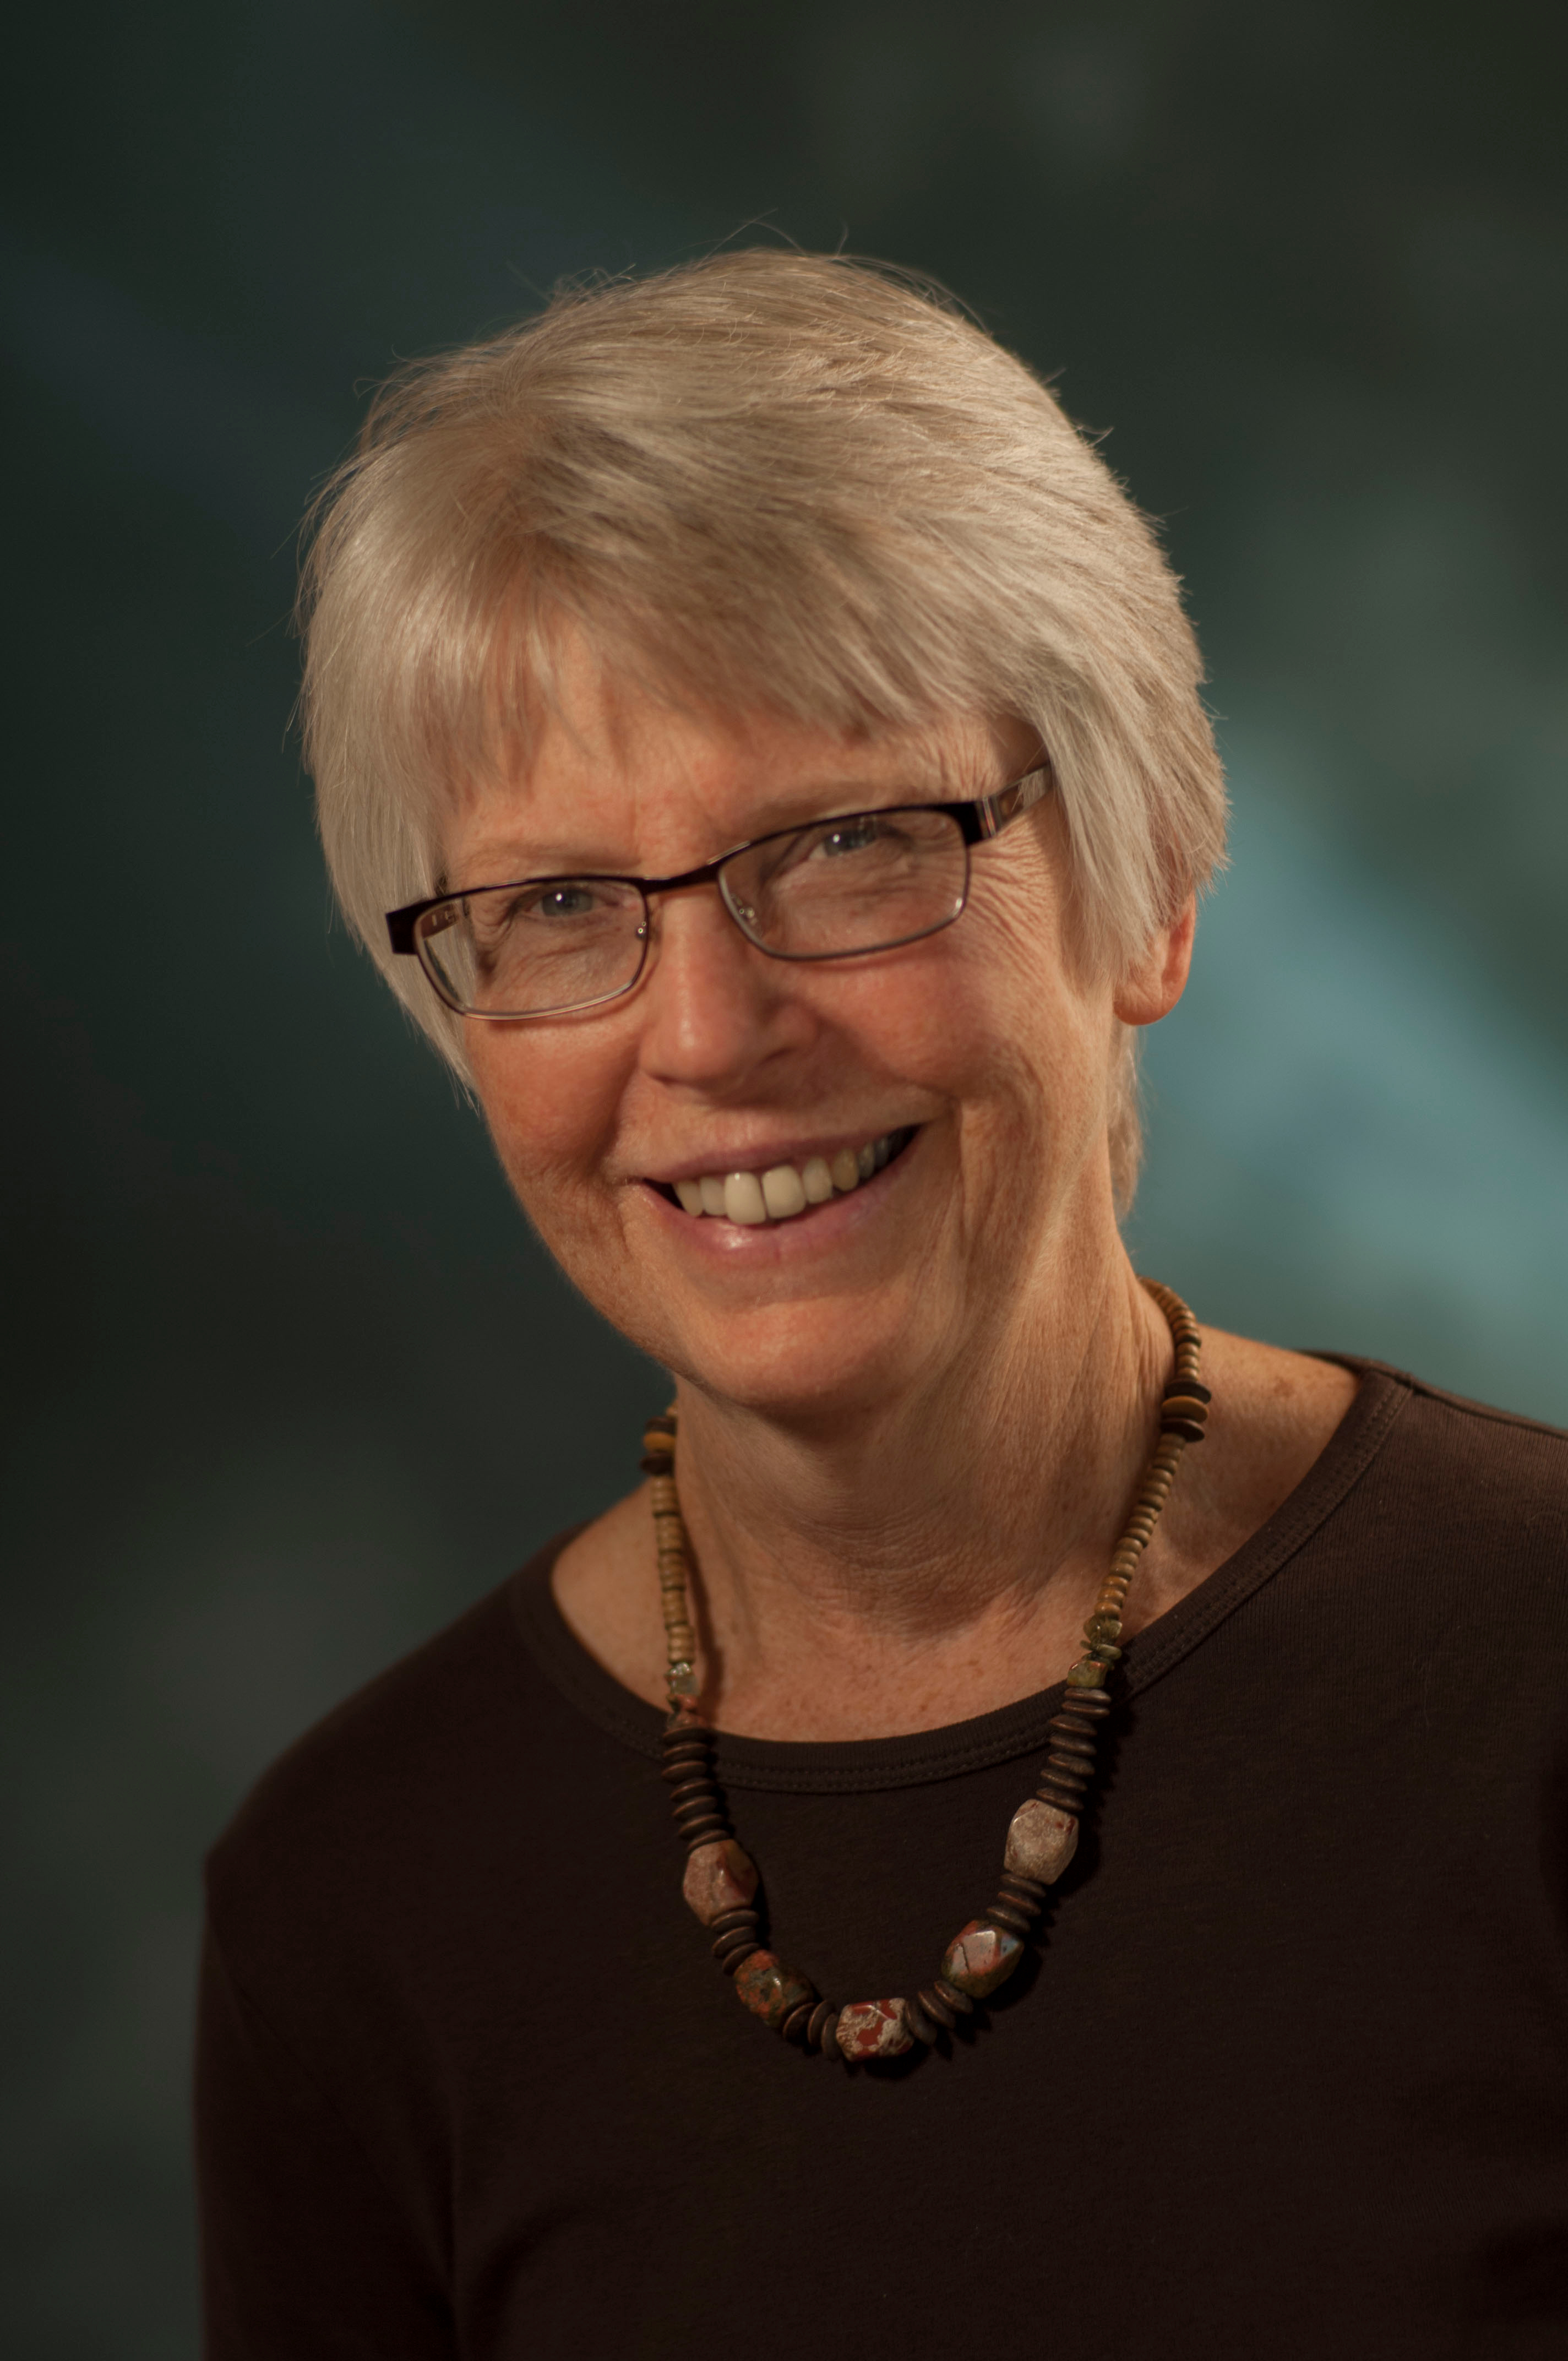 Dr. Deborah Drew is the program director of Husson University's graduate counseling program.